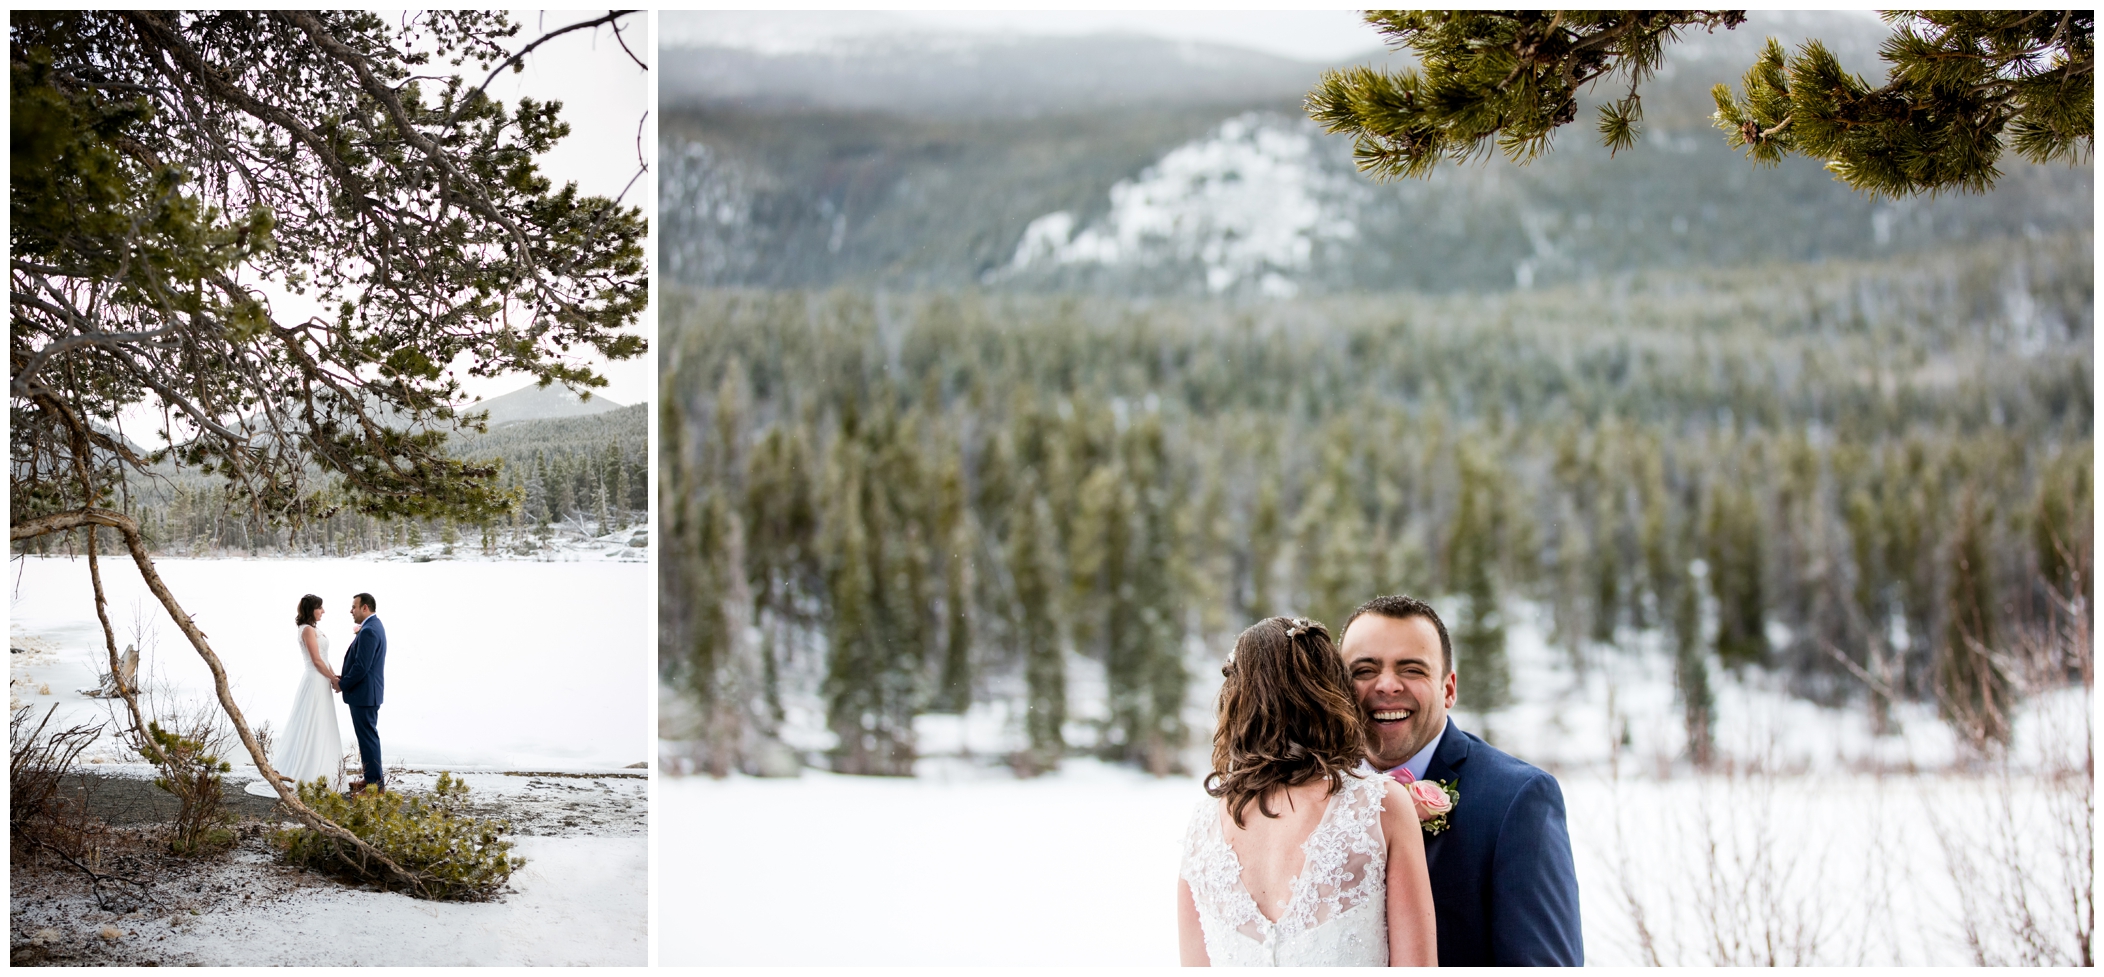 Sprague Lake winter wedding inspiration 